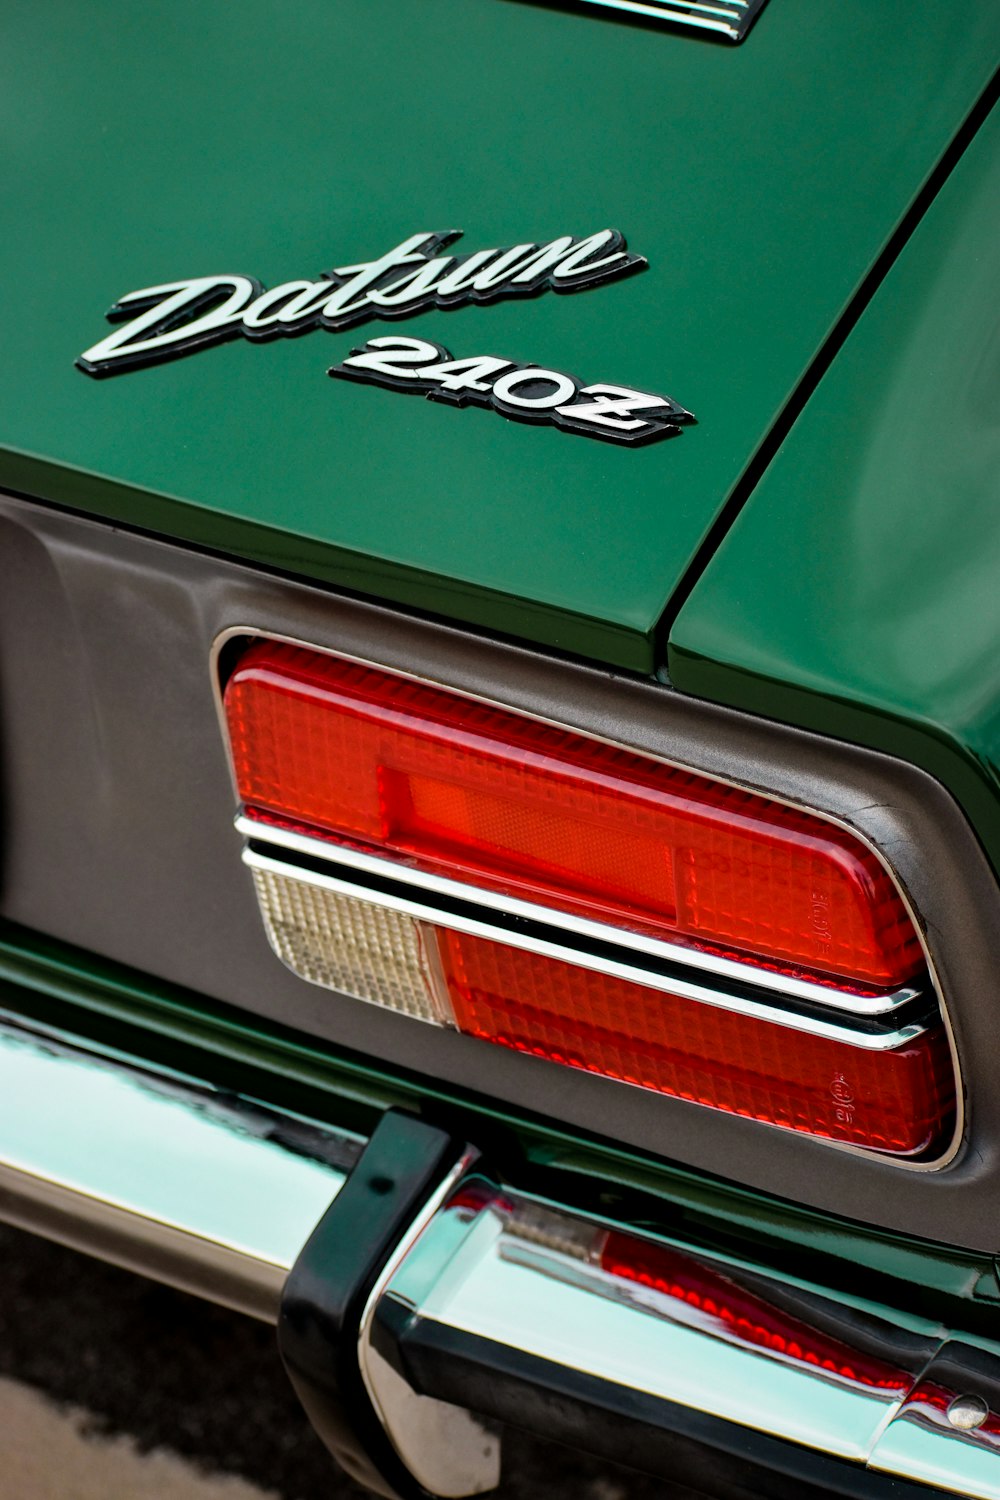 green Datsun 240z